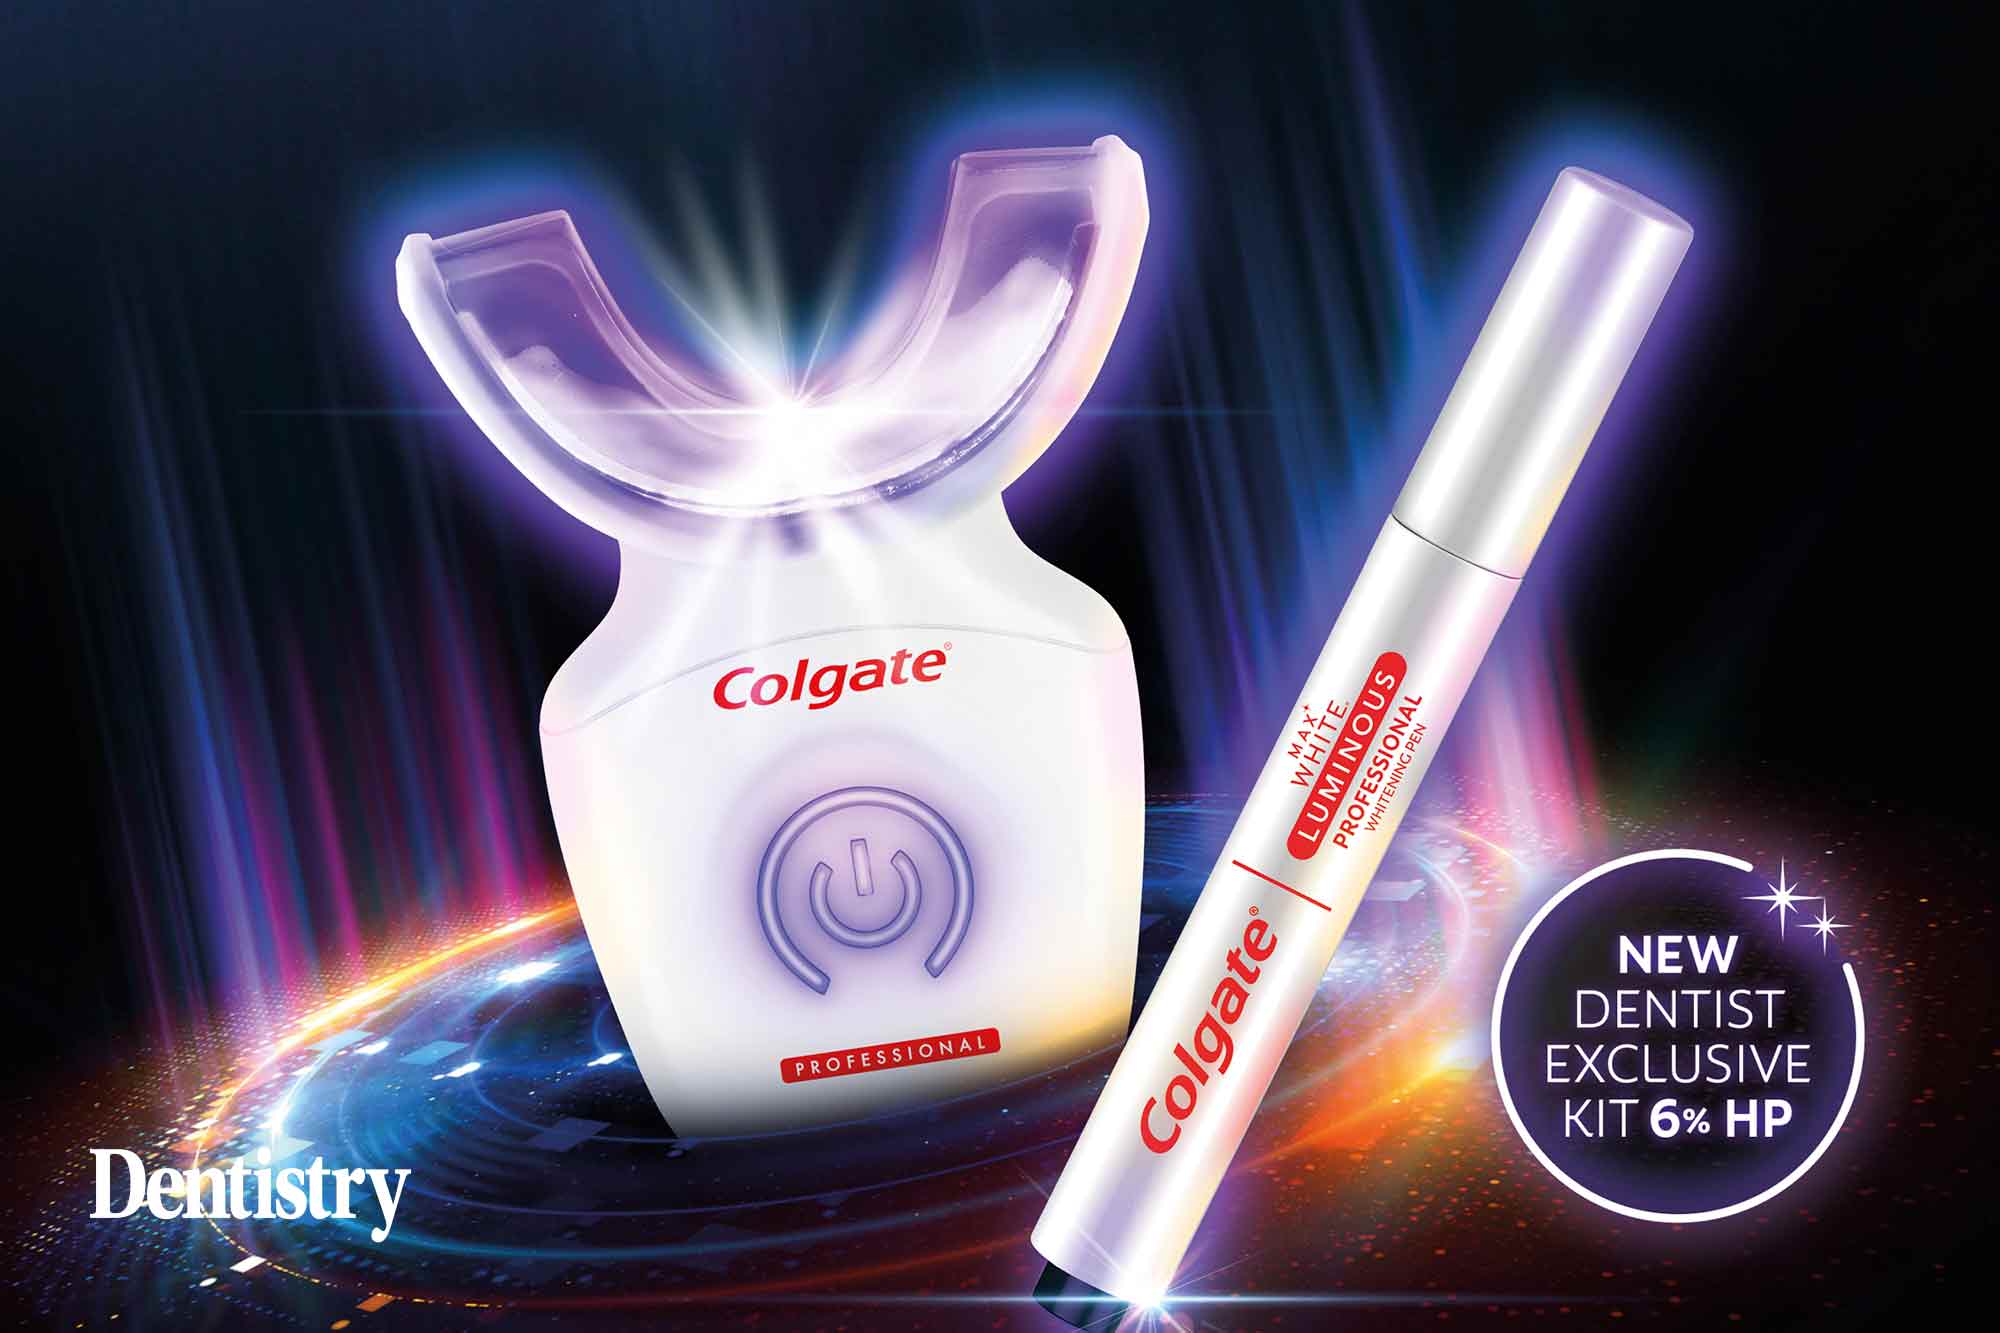 Colgate Luminous – professional whitening made simple